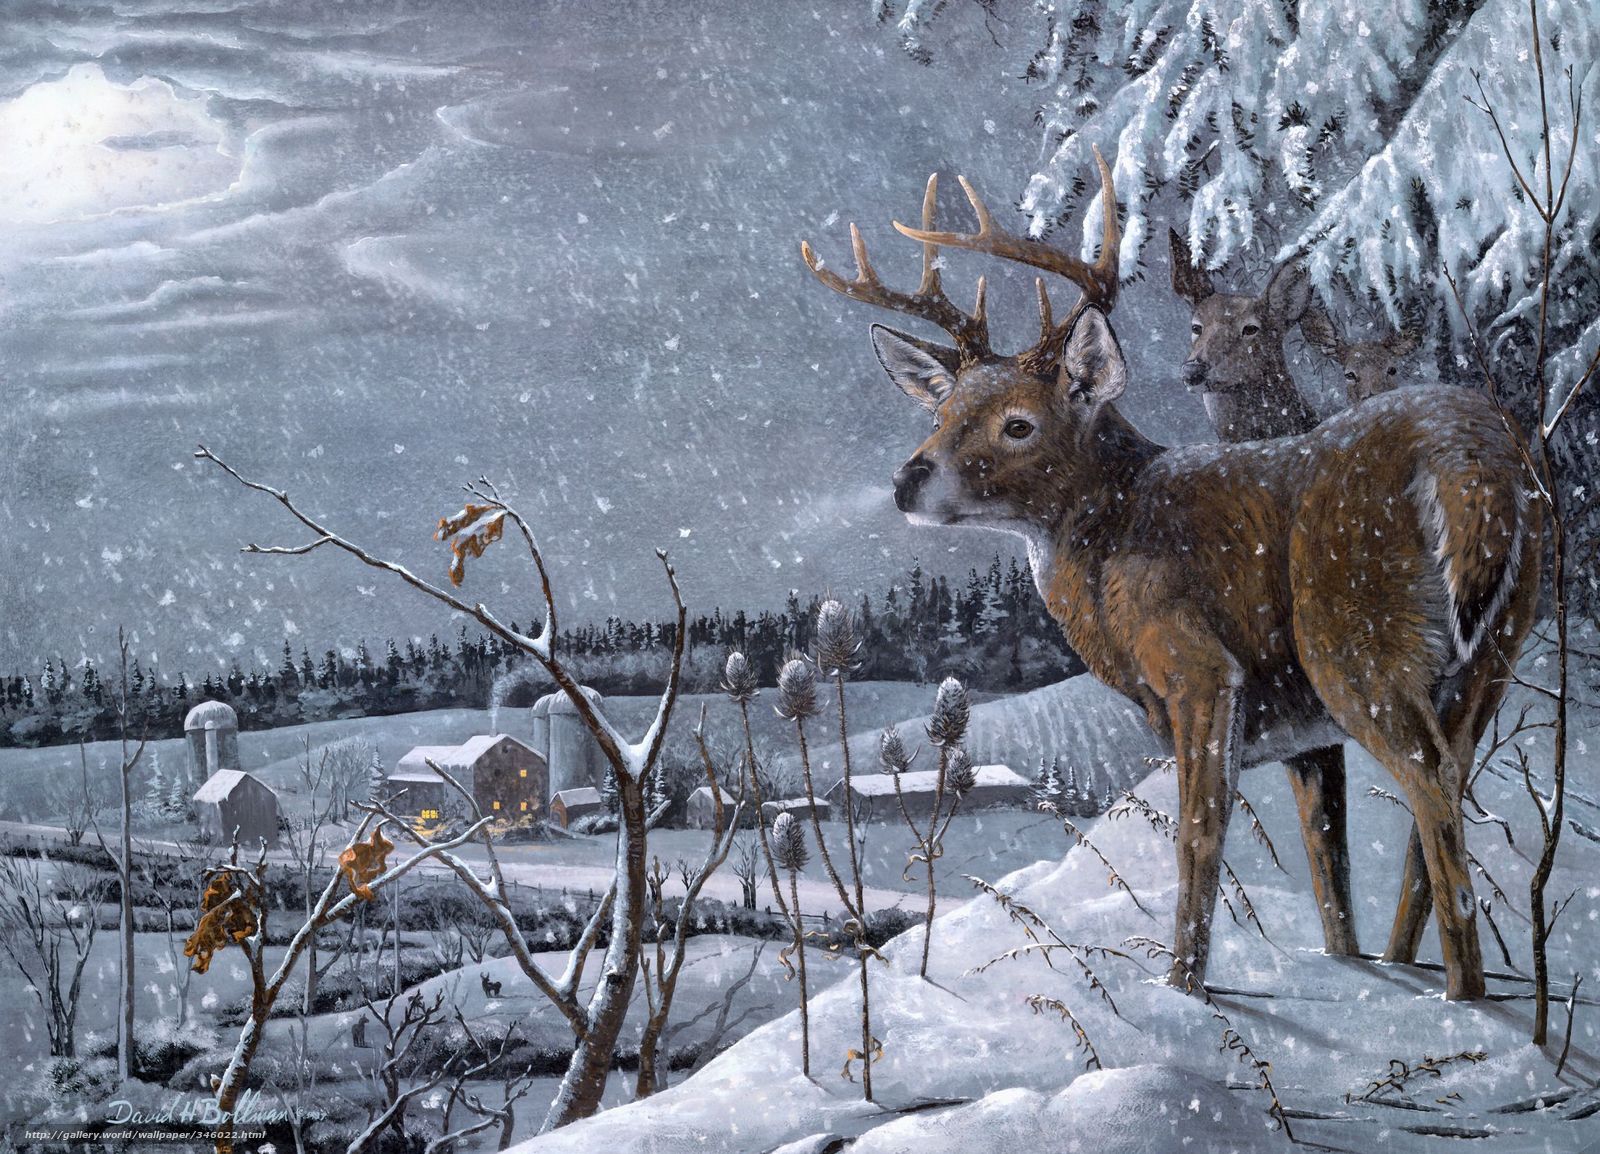 Download wallpaper david h bollman Deer Winter snow free